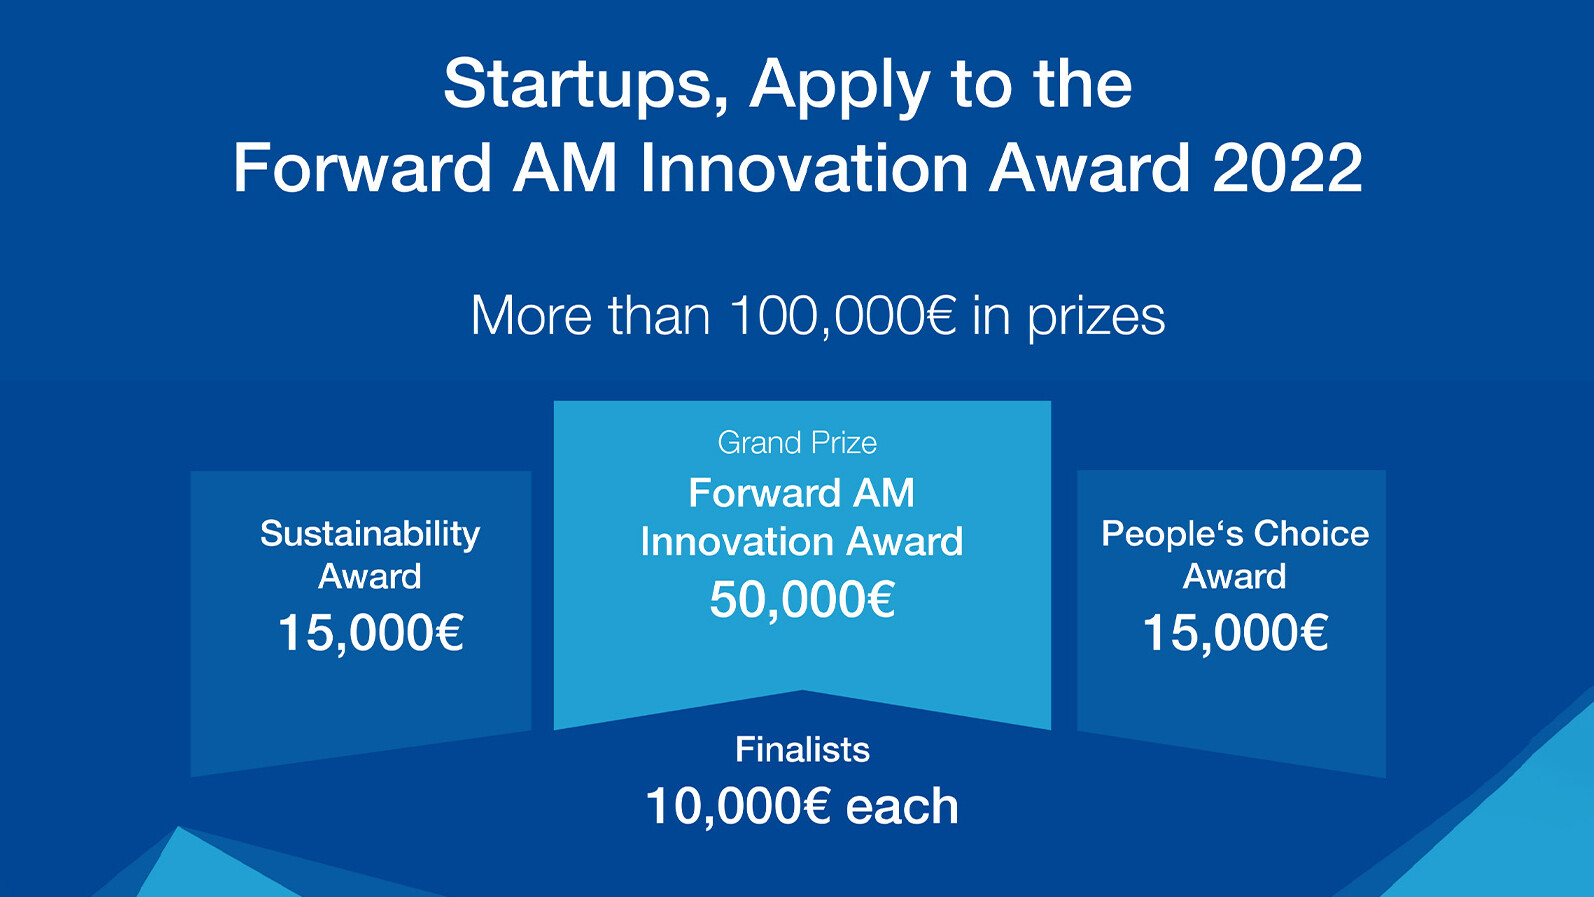 Startups, Apply to the Forward AM Innovation Award 2022